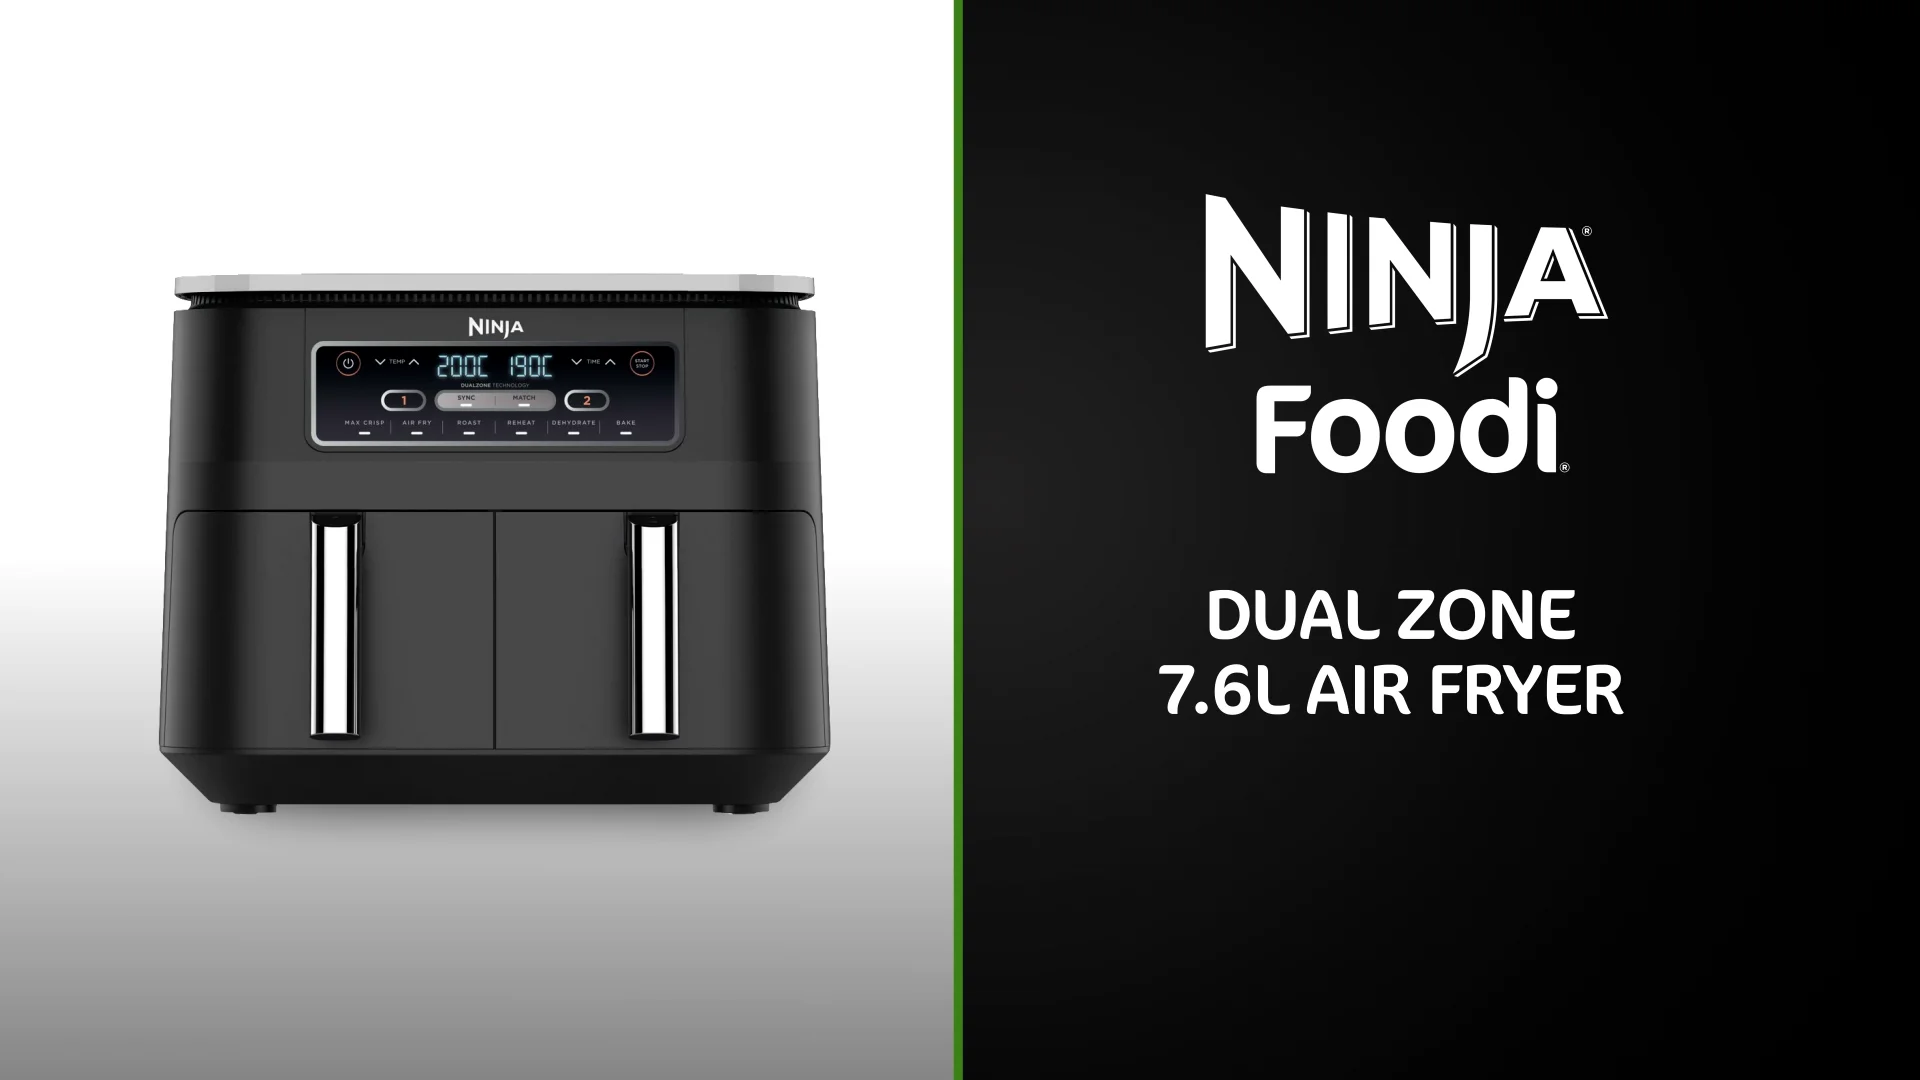 Introducing the Ninja Speedi™ Rapid Cooker & Air Fryer on Vimeo